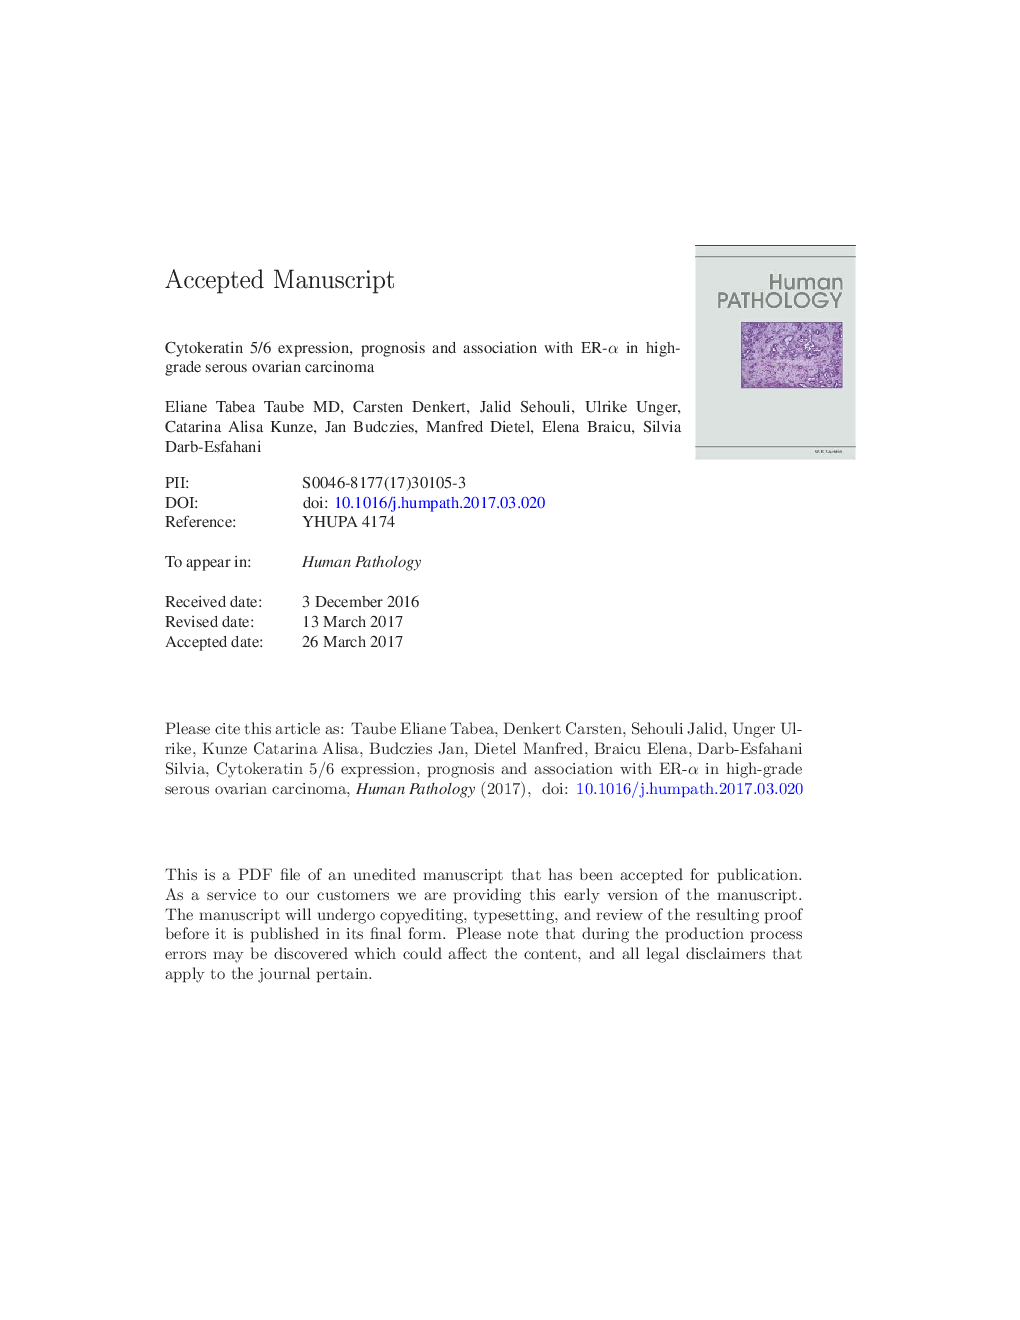 Cytokeratin 5/6 expression, prognosis, and association with estrogen receptor Î± in high-grade serous ovarian carcinoma